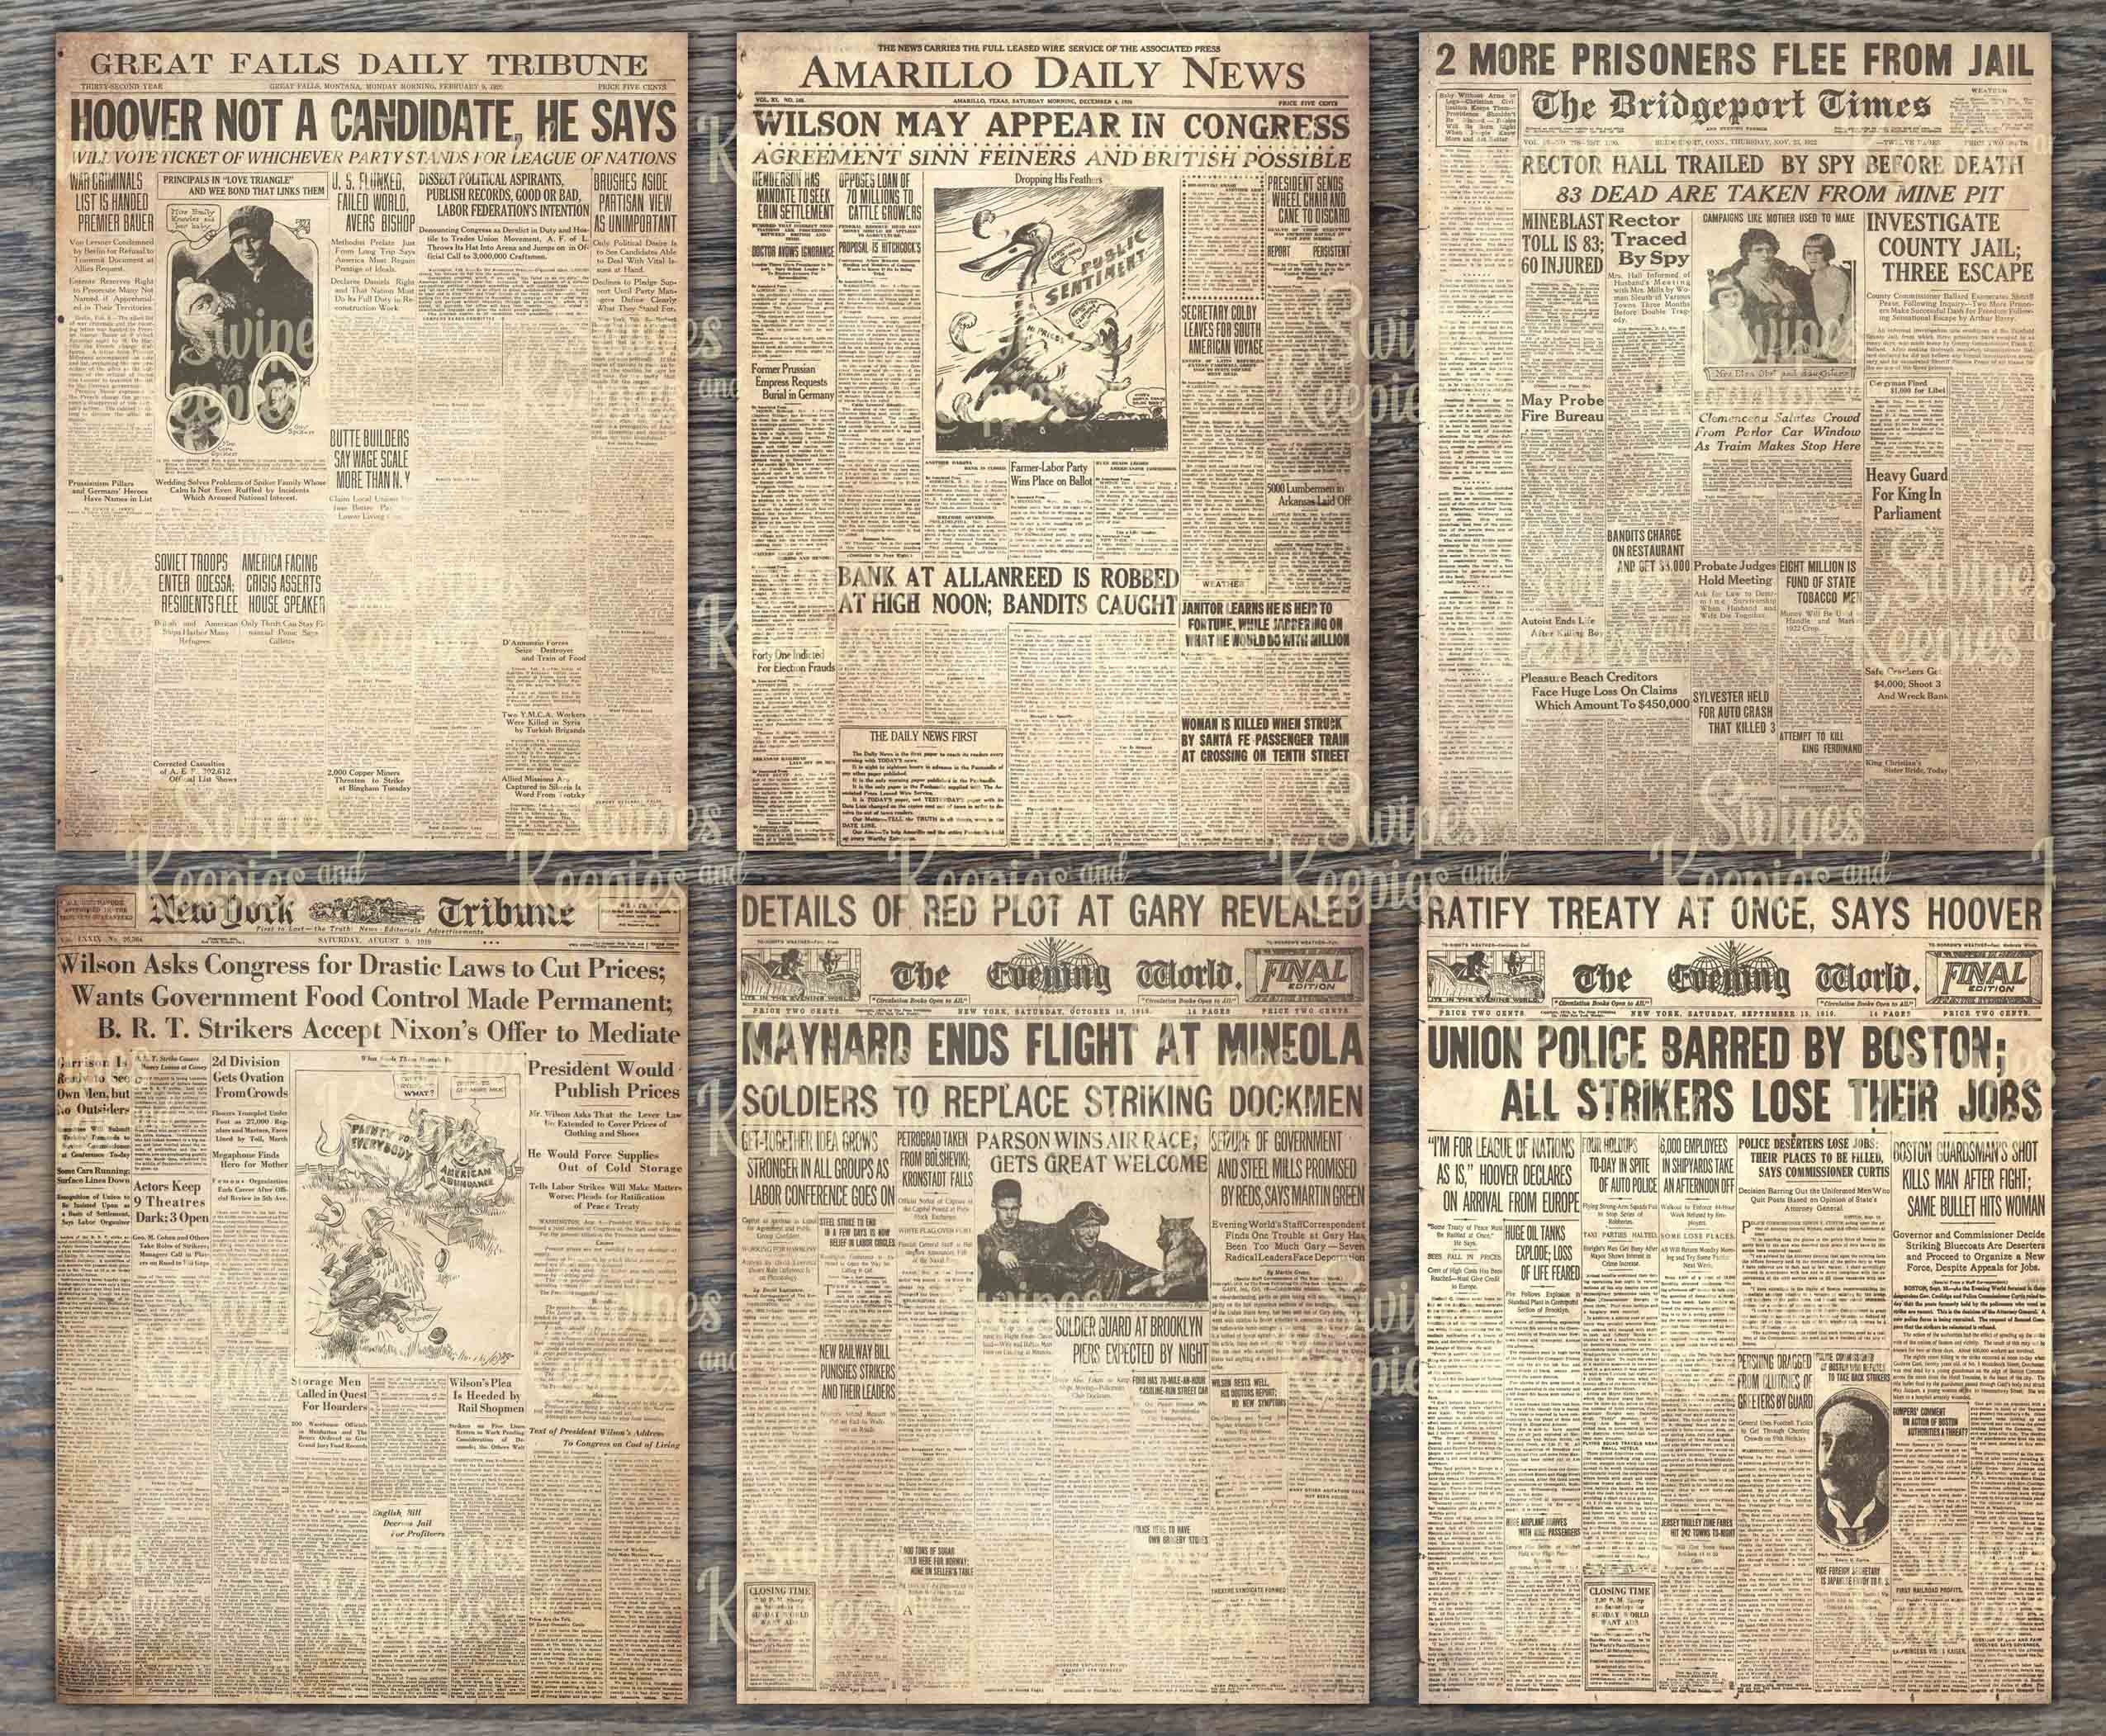 NEWSPAPER Paper Pack Ephemera Papers Set Printable Papers Vintage Antique  Junk Journaling Instant Download Digital Collage Sheet PP100 